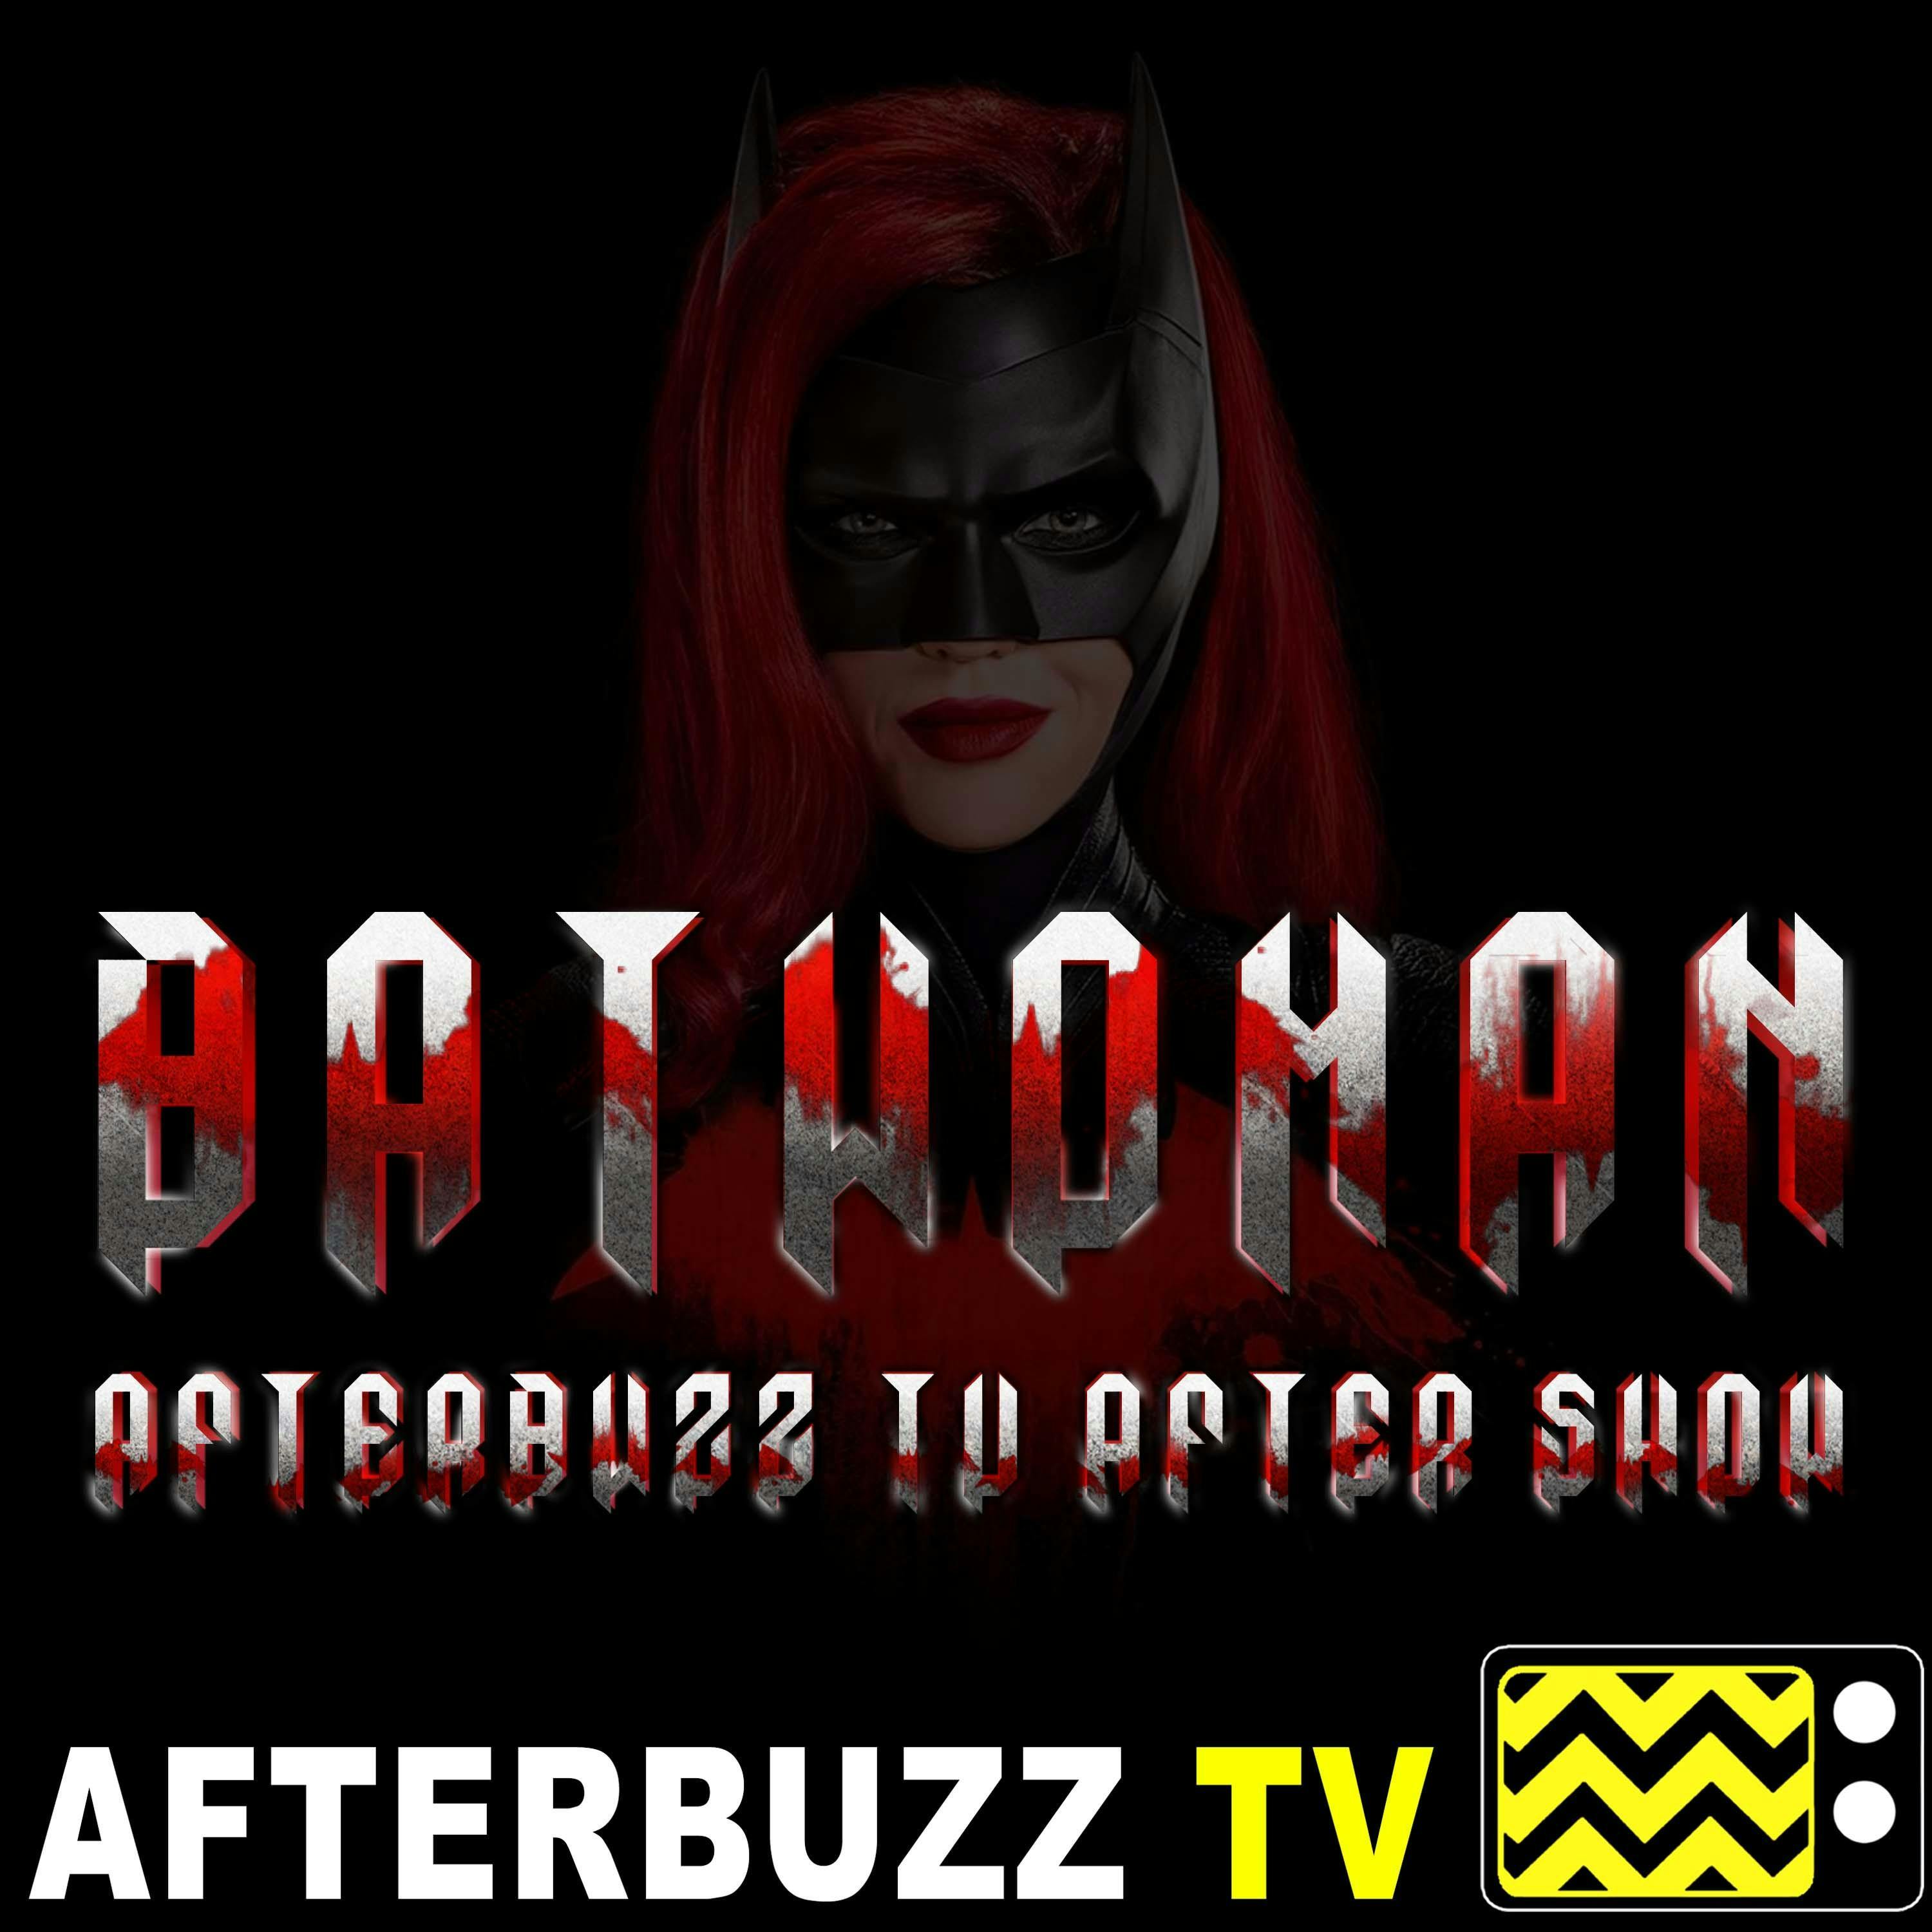 Batwoman S1 E19 Recap & After Show: A Secret Kept From All The Rest